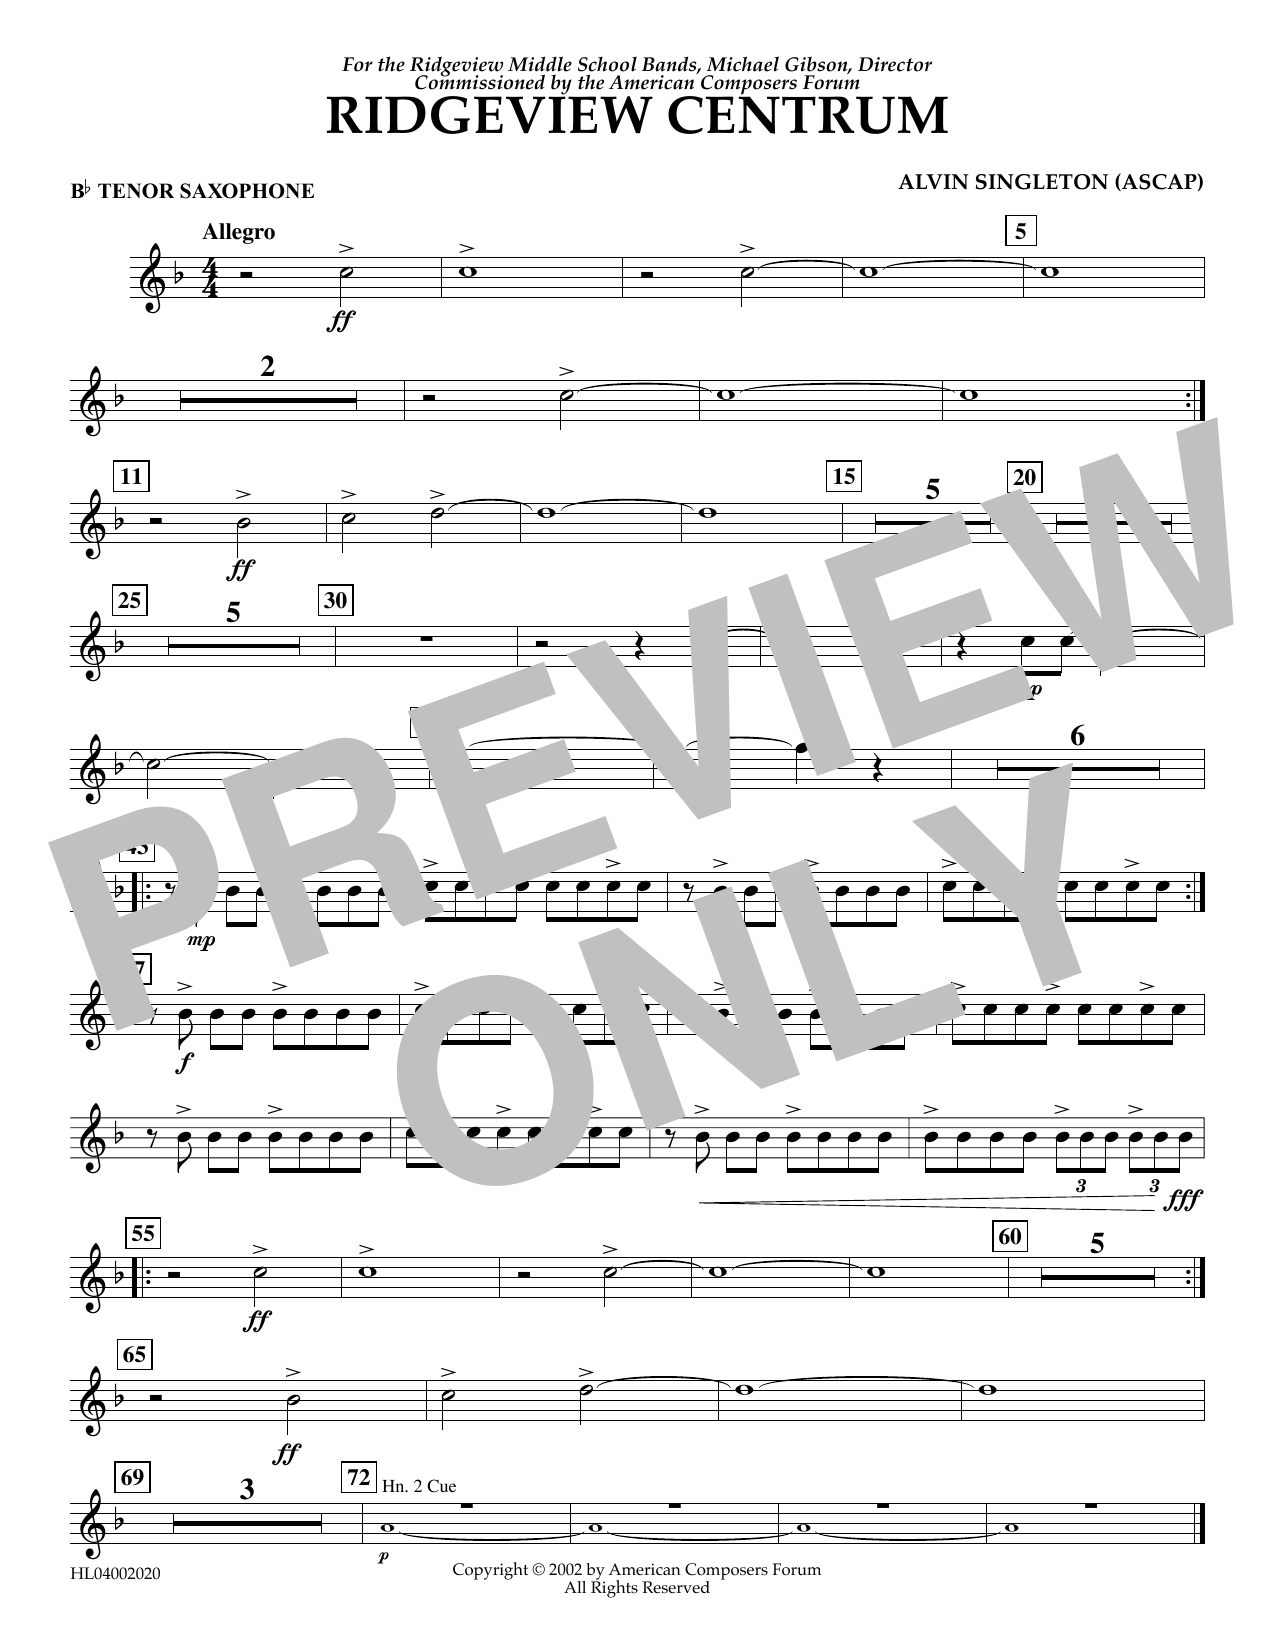 Alvin Singleton Ridgeview Centrum - Bb Tenor Saxophone Sheet Music Notes & Chords for Concert Band - Download or Print PDF